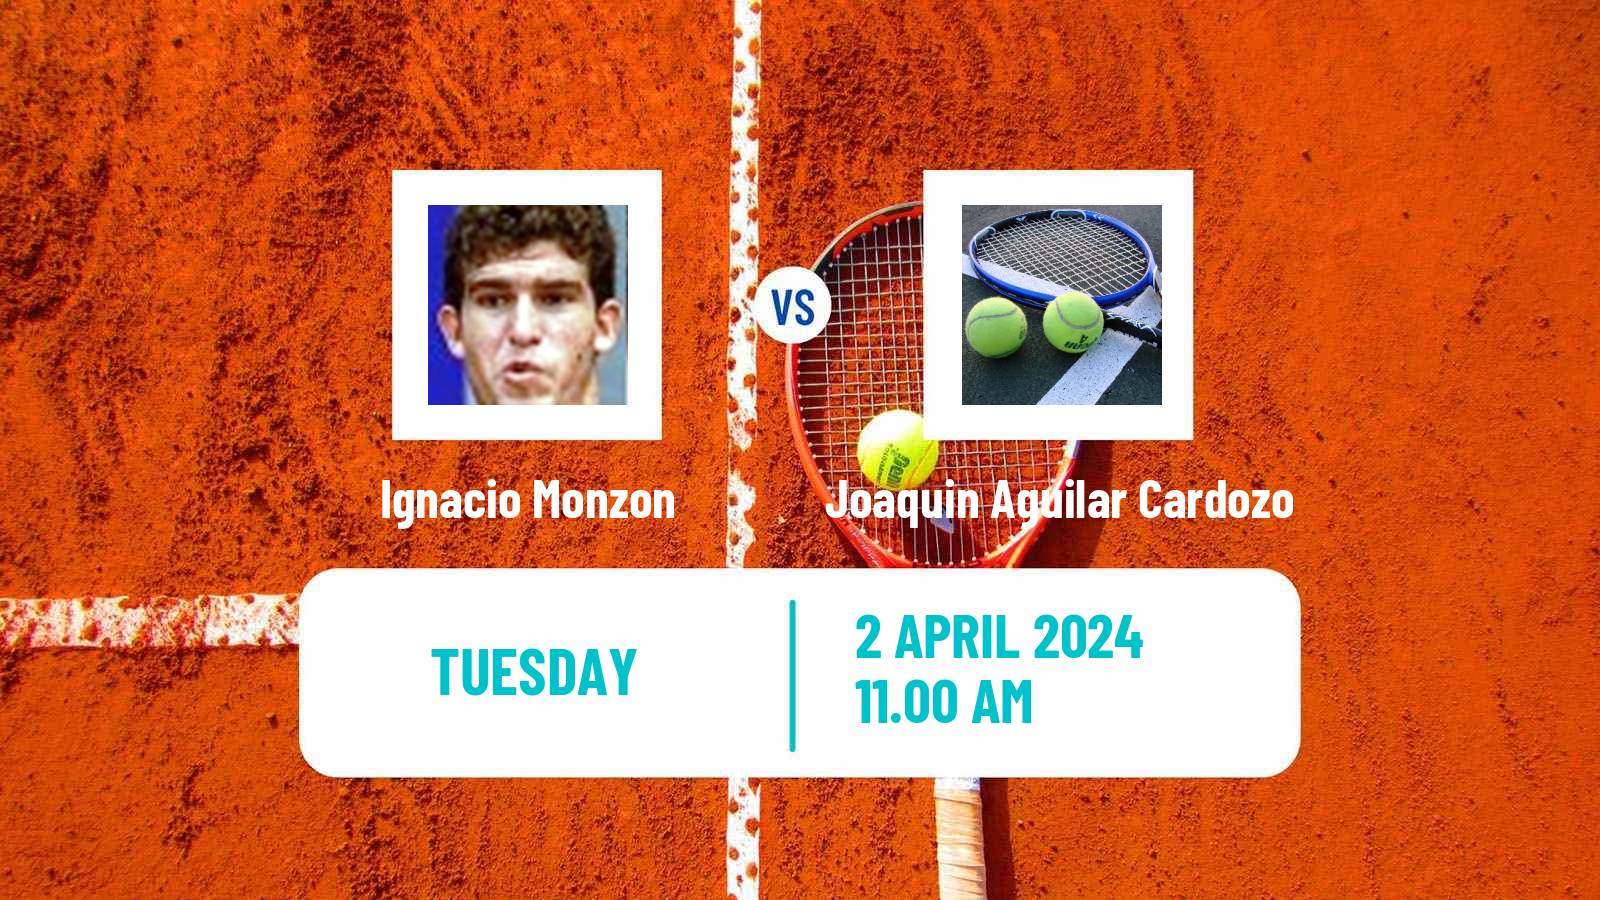 Tennis ITF M15 Bragado 2 Men Ignacio Monzon - Joaquin Aguilar Cardozo